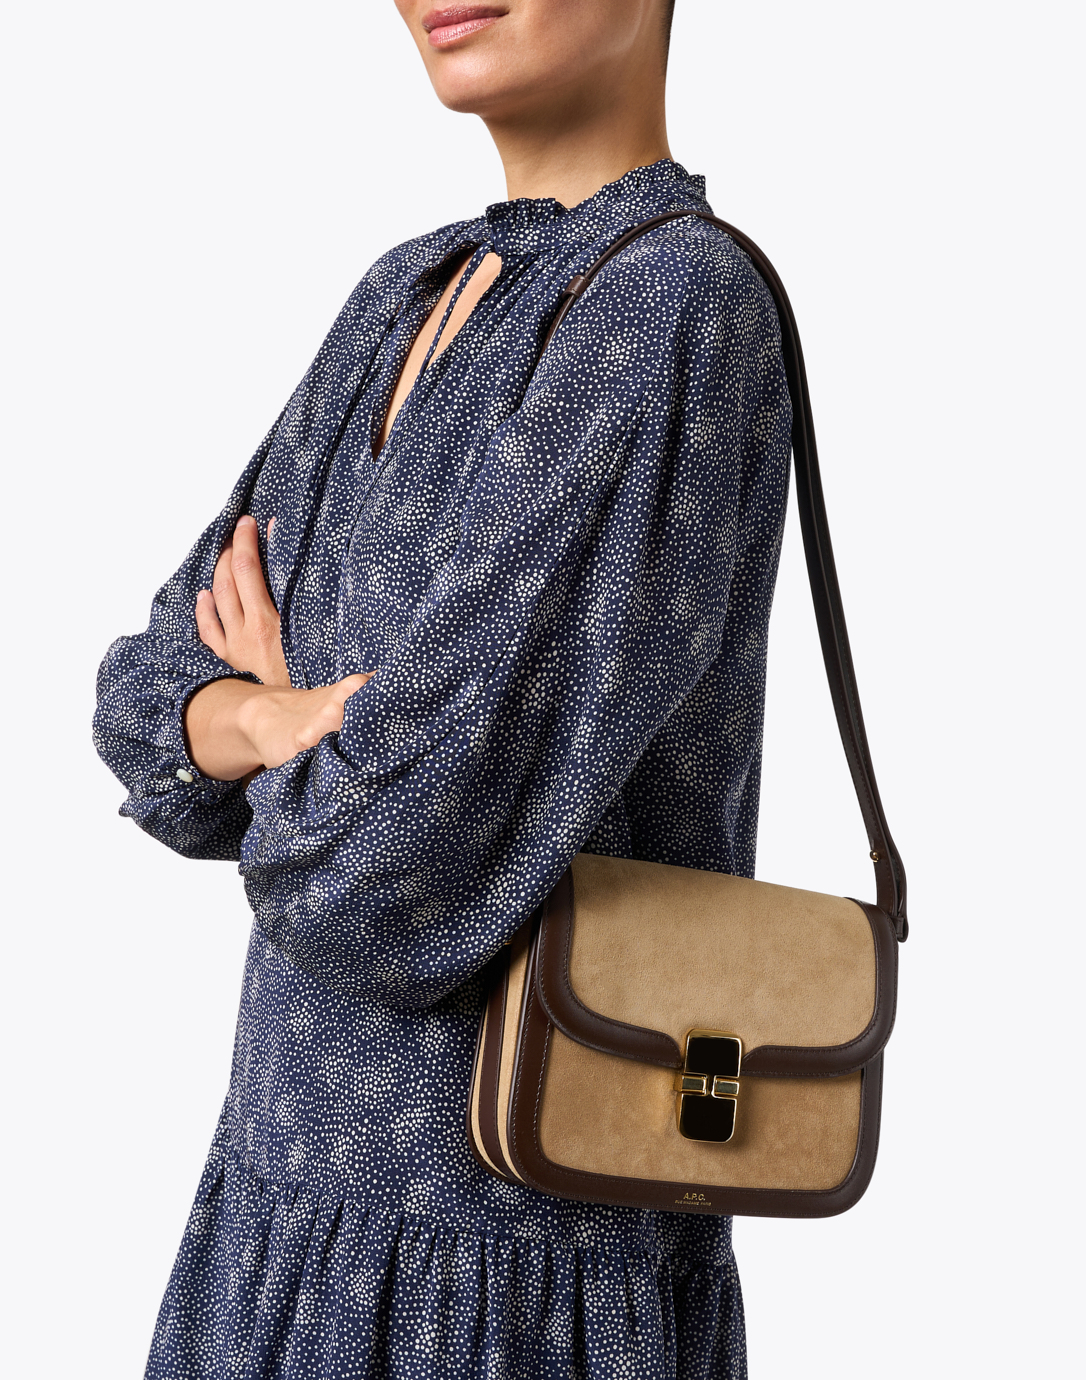 Grace Leather Shoulder Bag in Brown - A P C